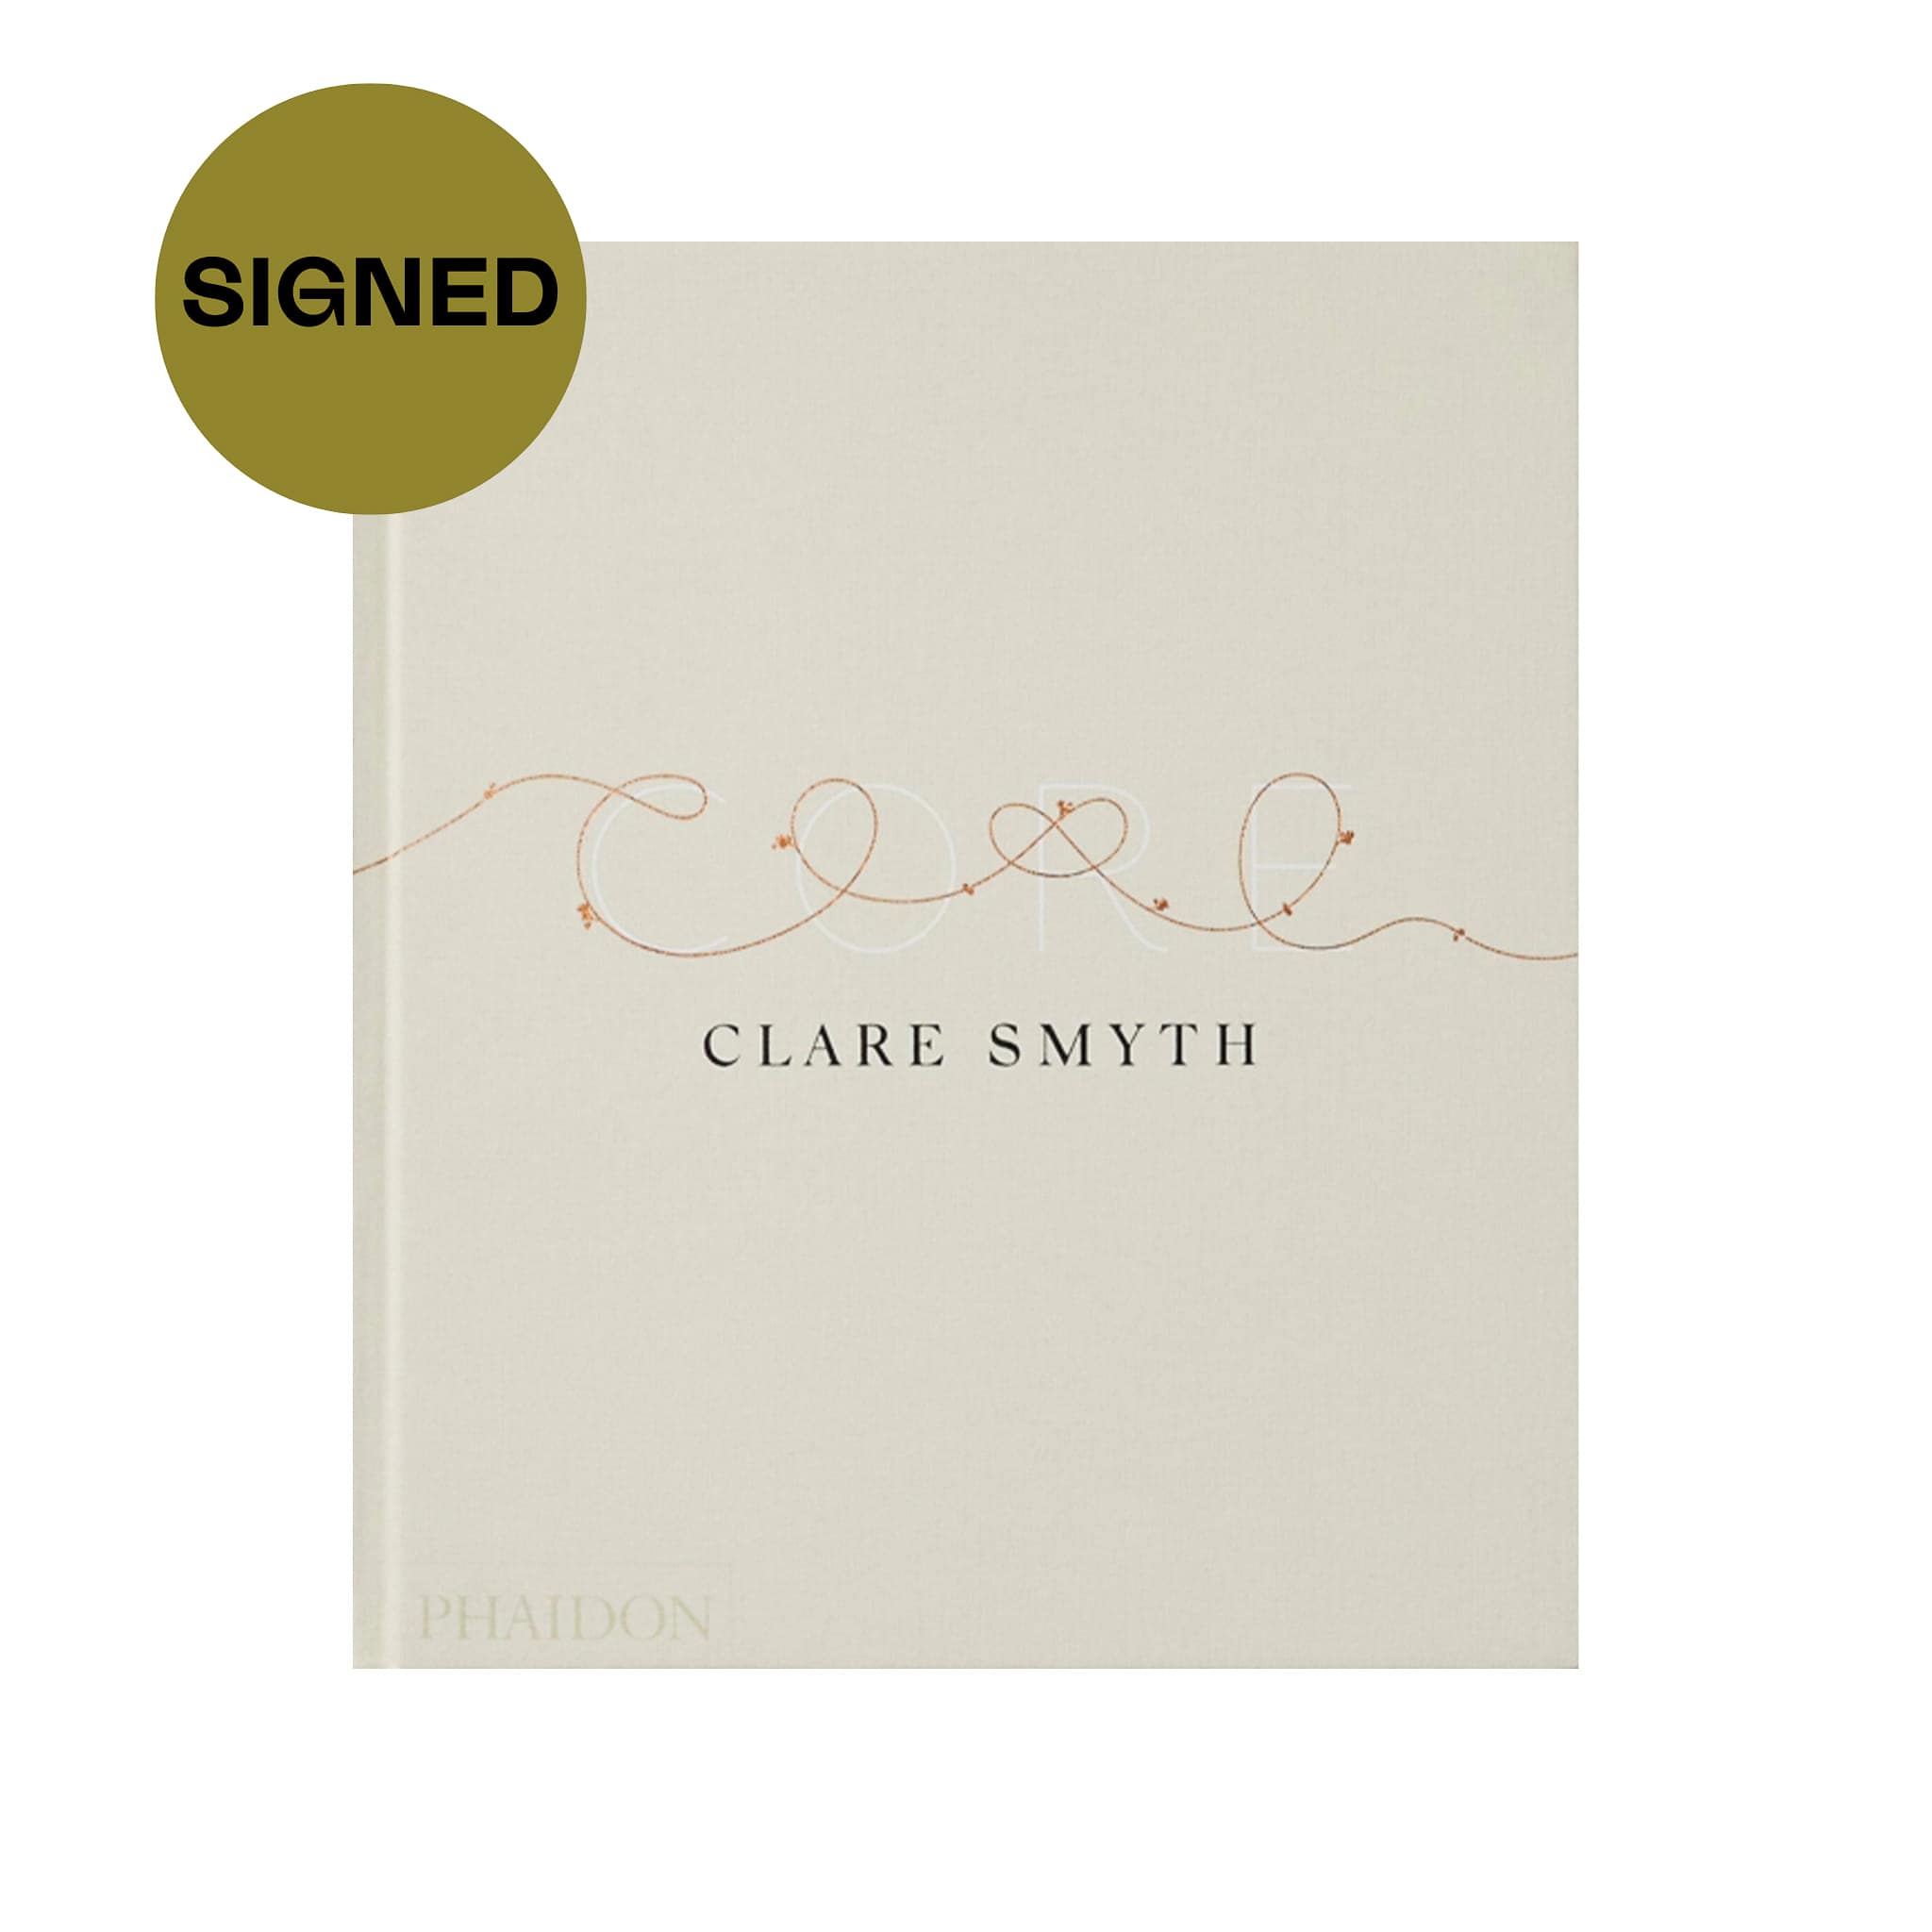 Core by Clare Smyth, Signed Copy